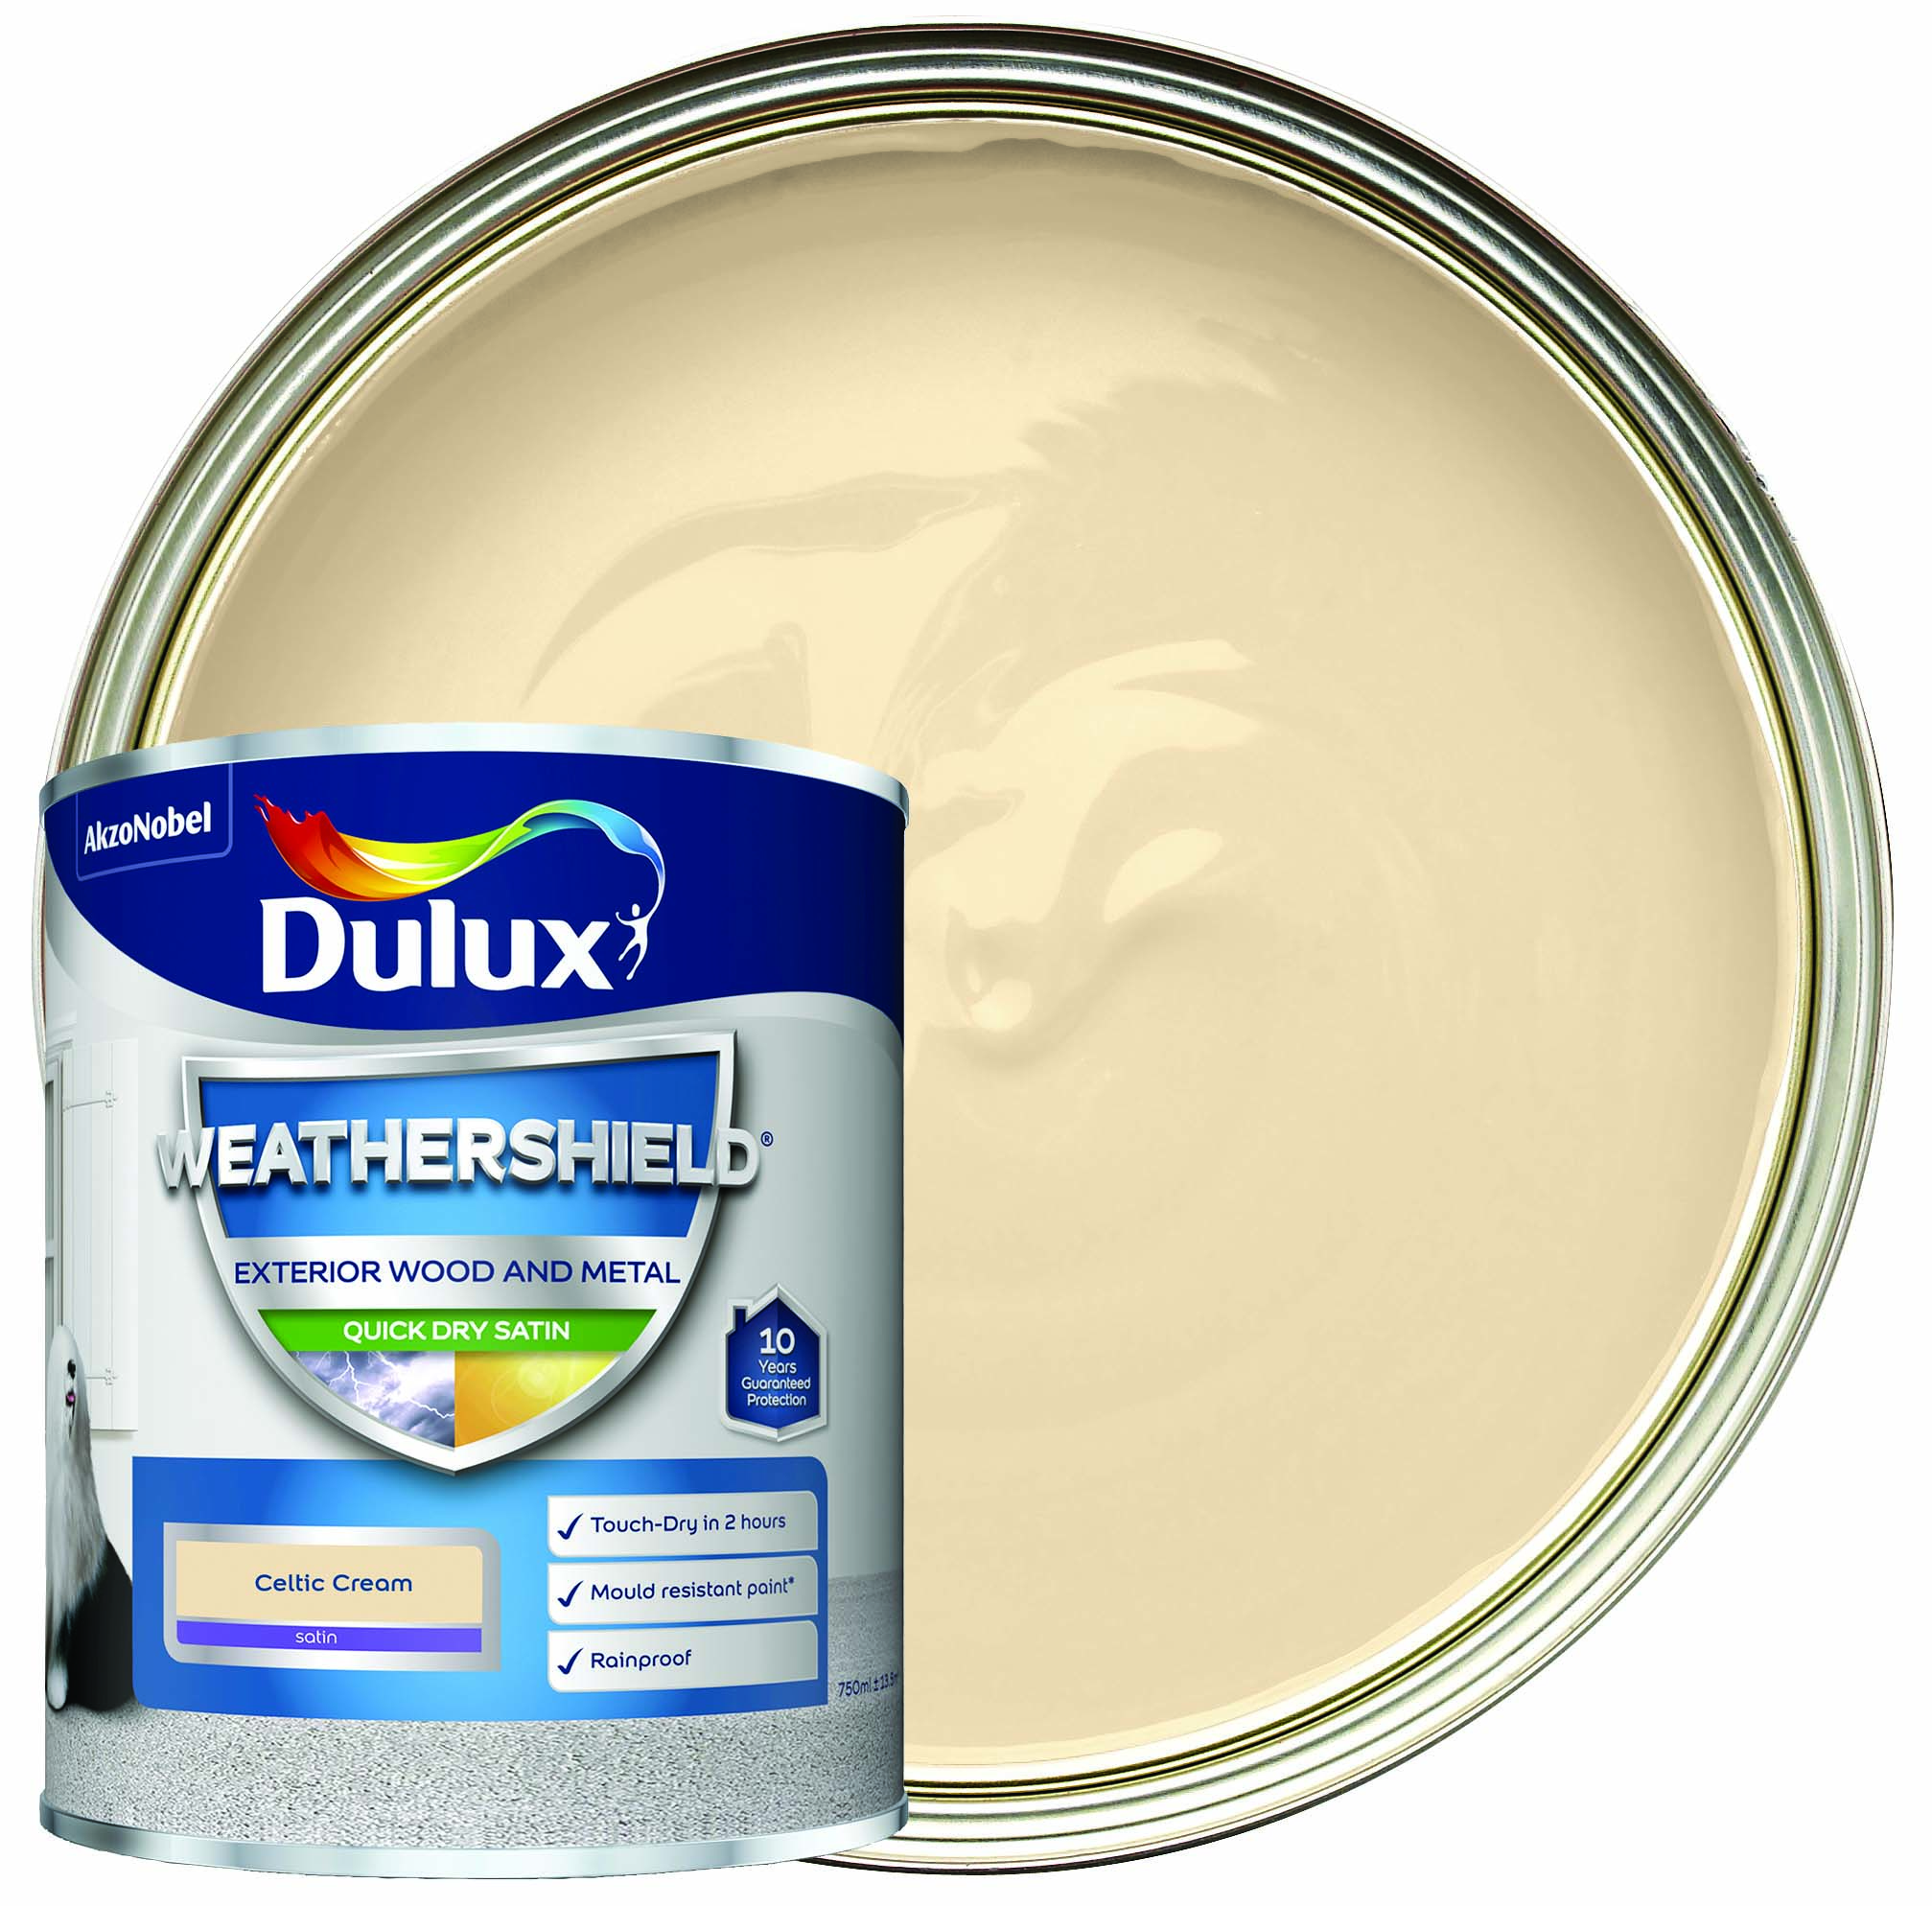 Image of Dulux Weathershield Quick Dry Satin - Celtic Cream - 750ml